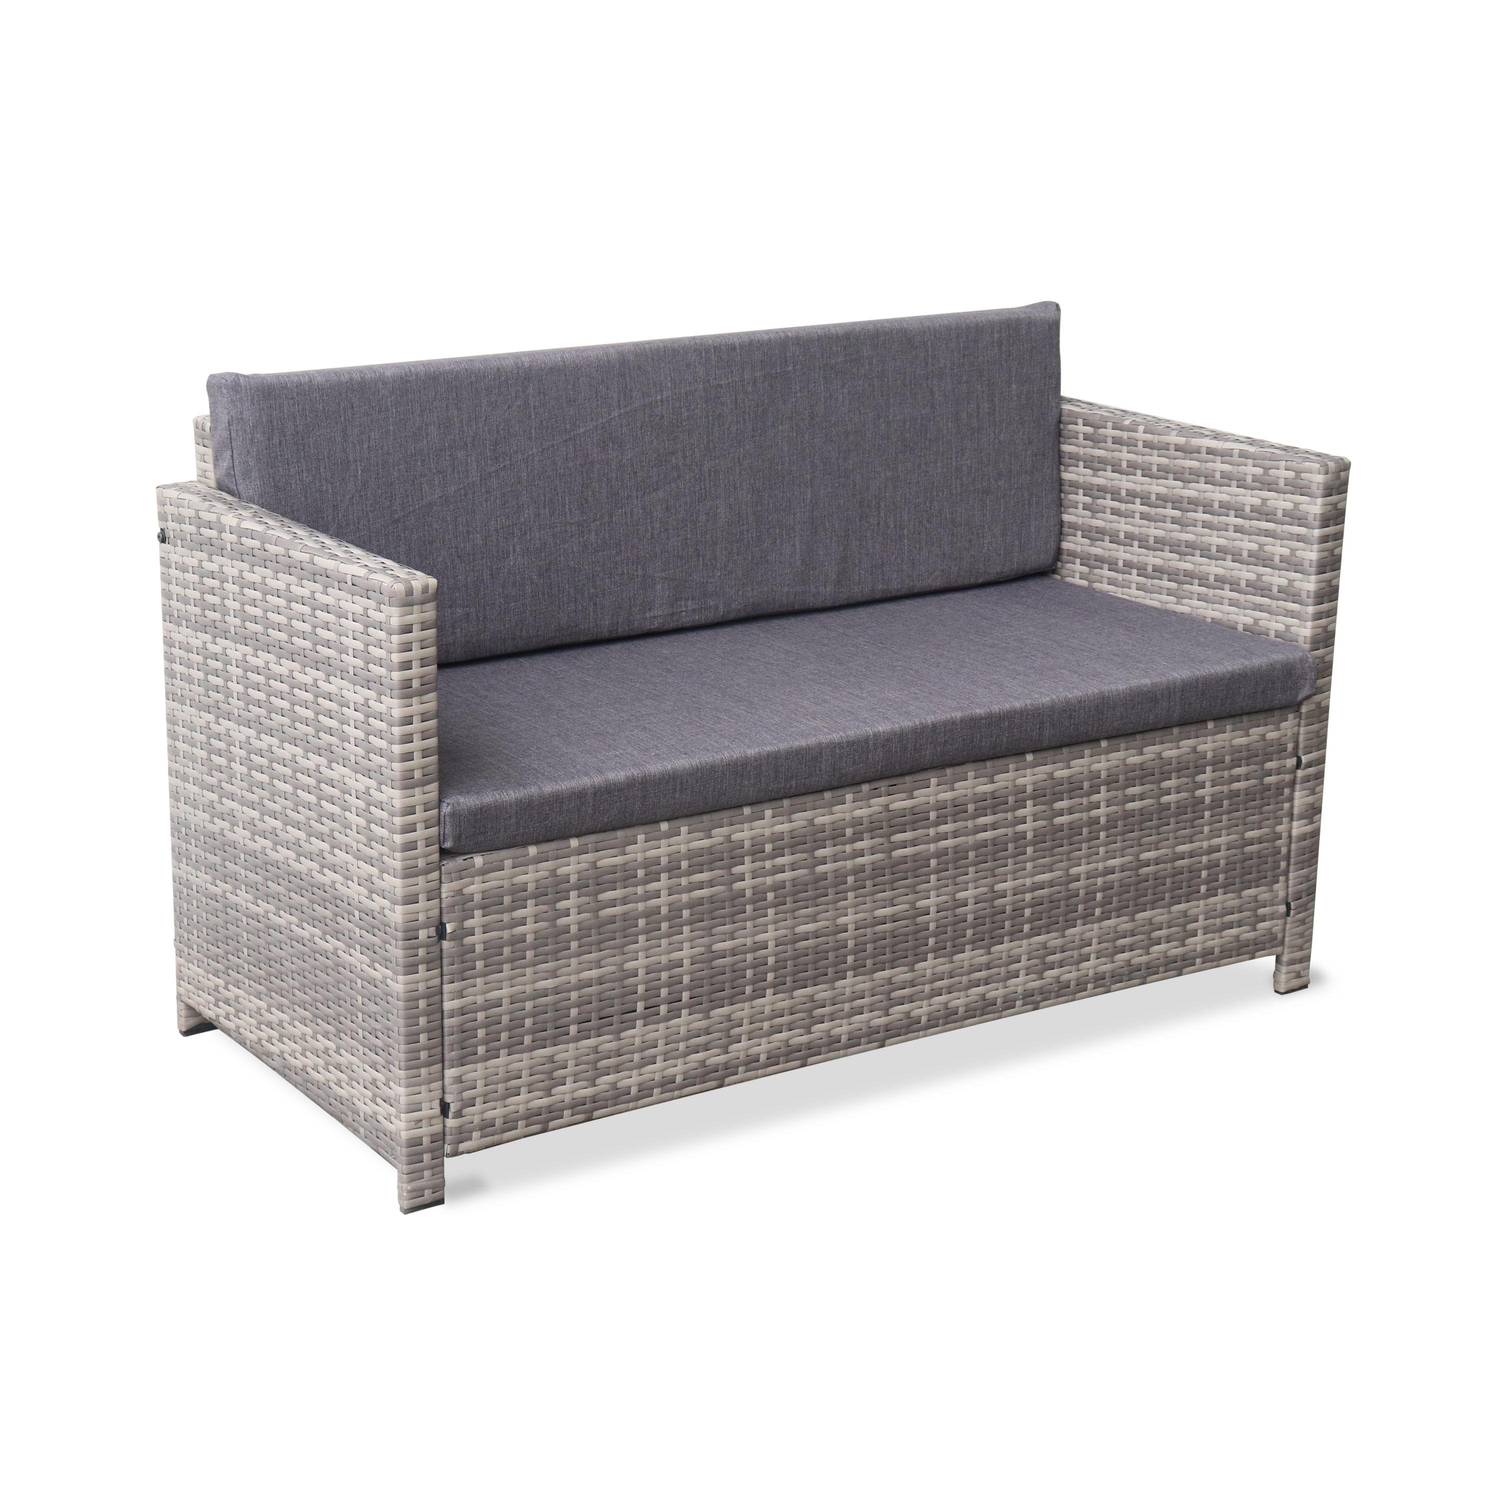 4-seater polyrattan garden sofa set - sofa, 2 armchairs, coffee table - Perugia - Mixed Grey rattan, Grey cushions Photo3